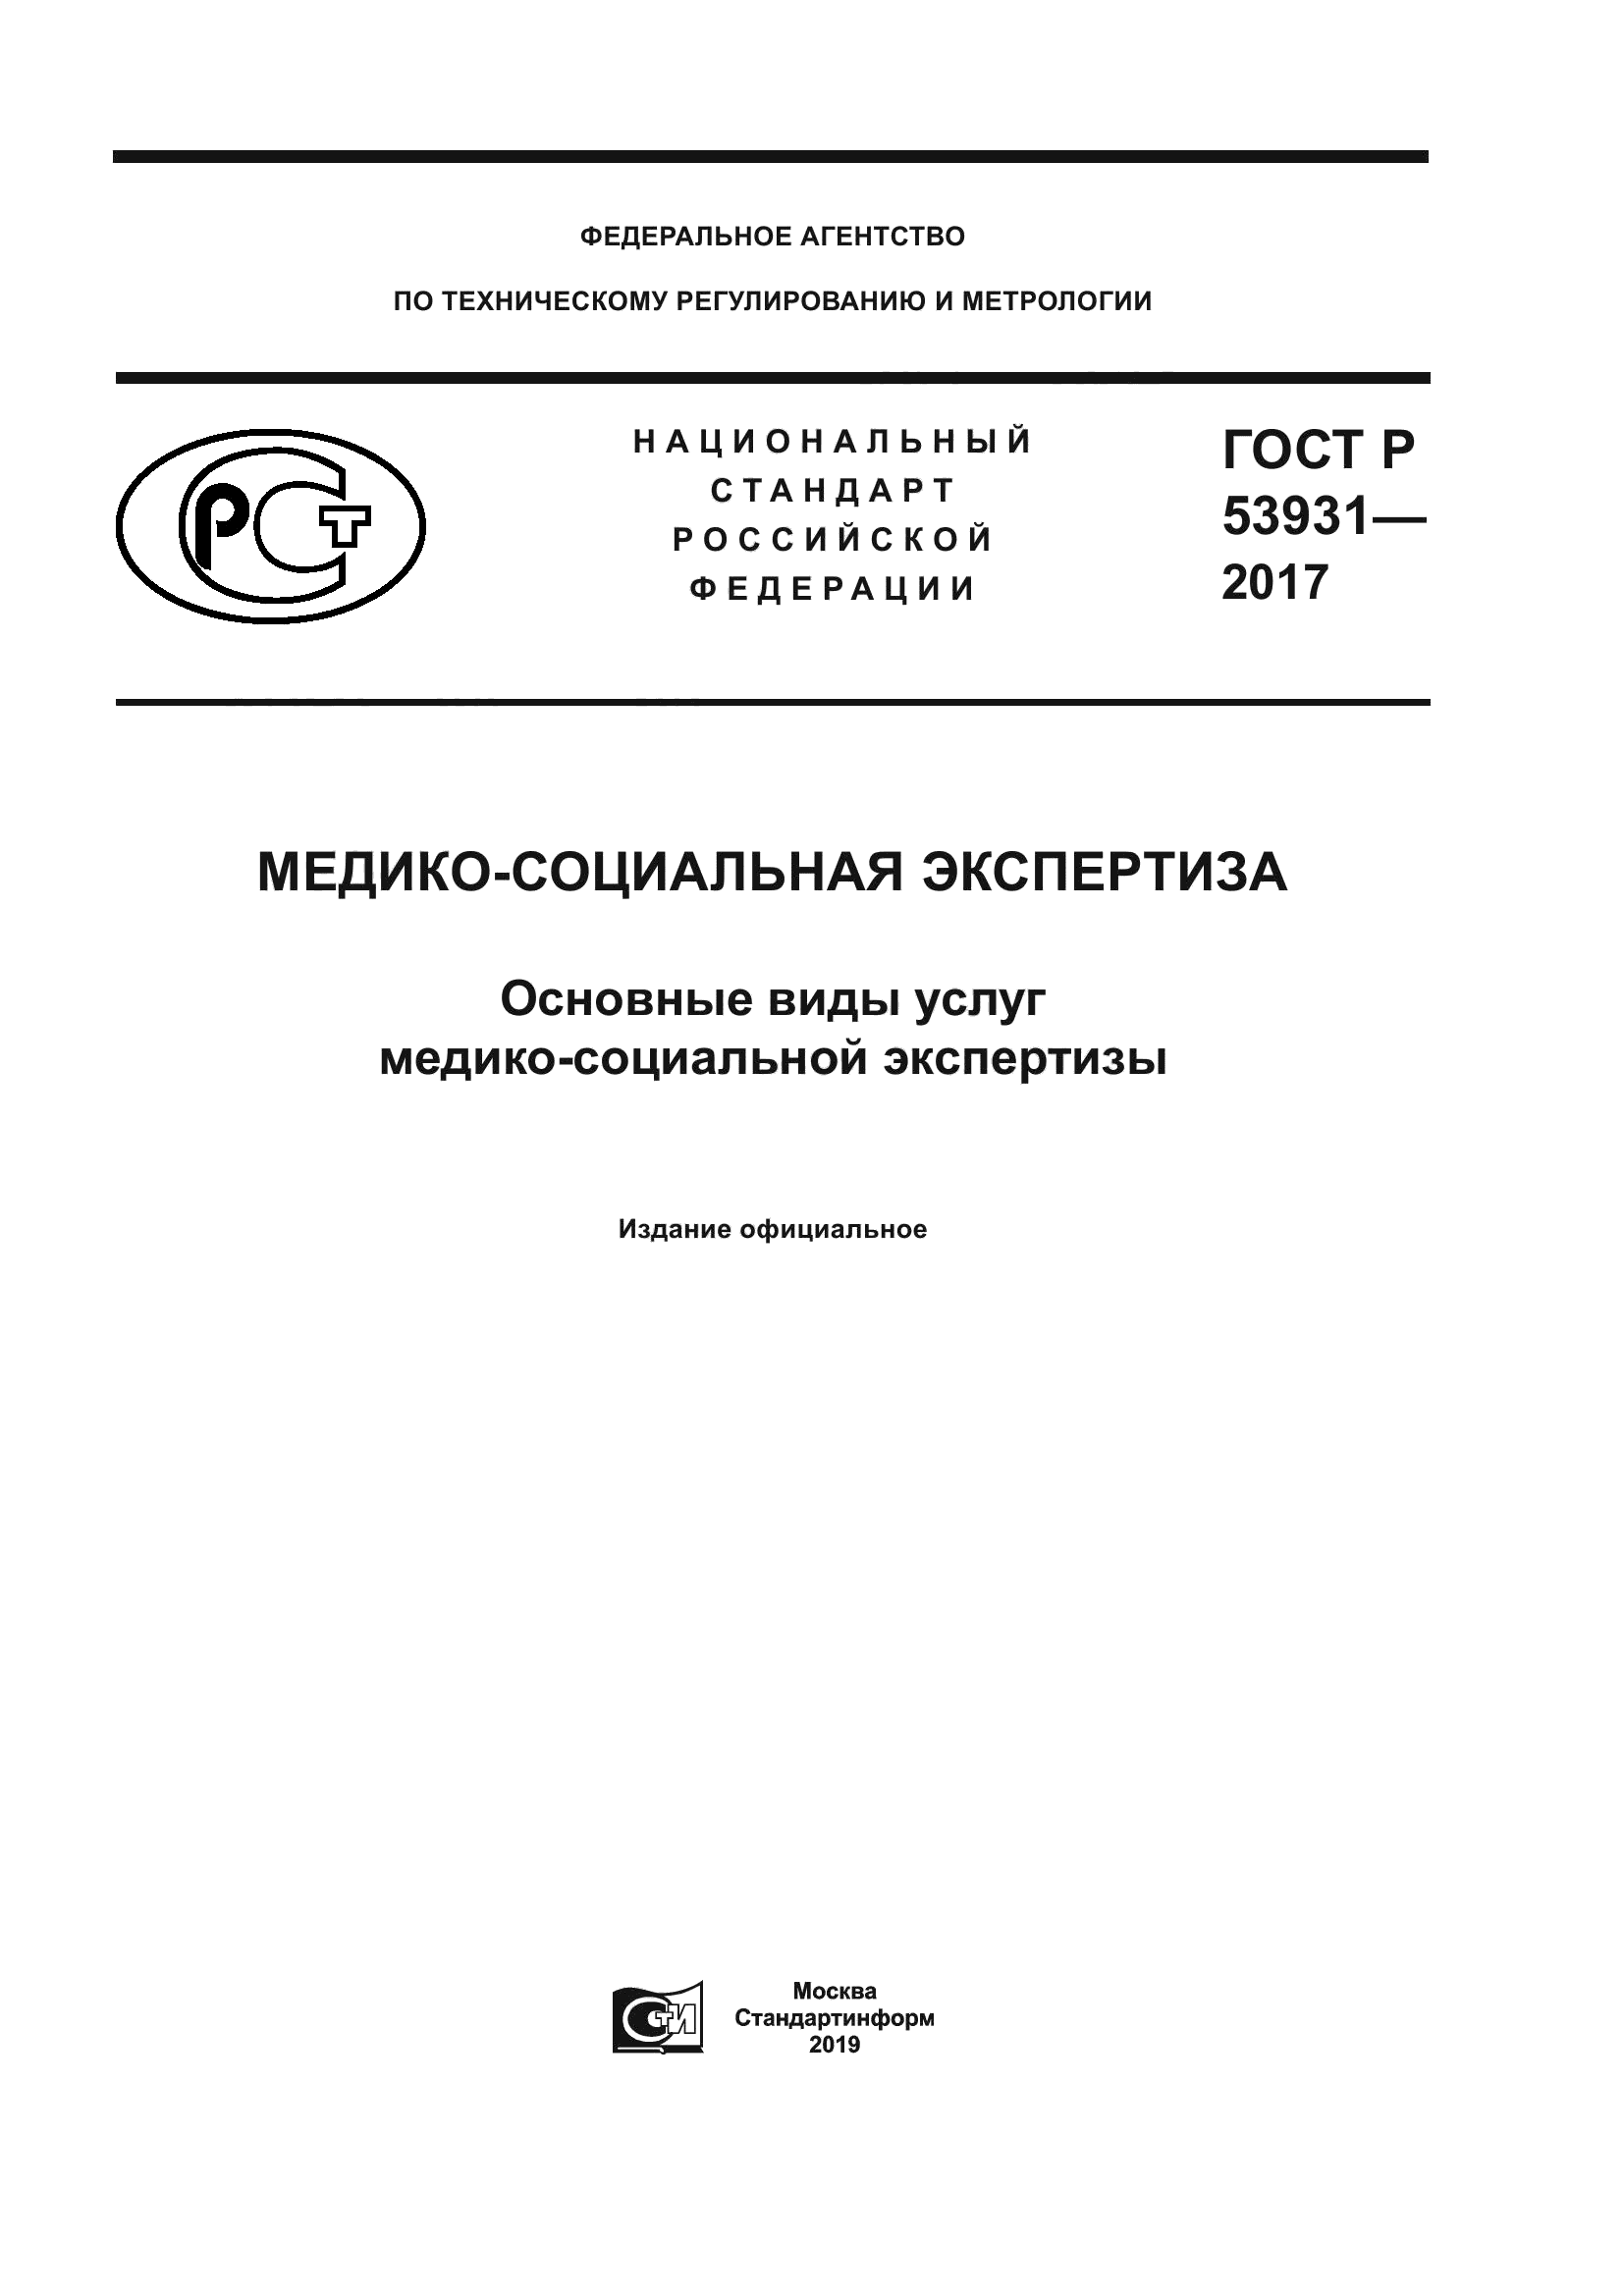 ГОСТ Р 53931-2017